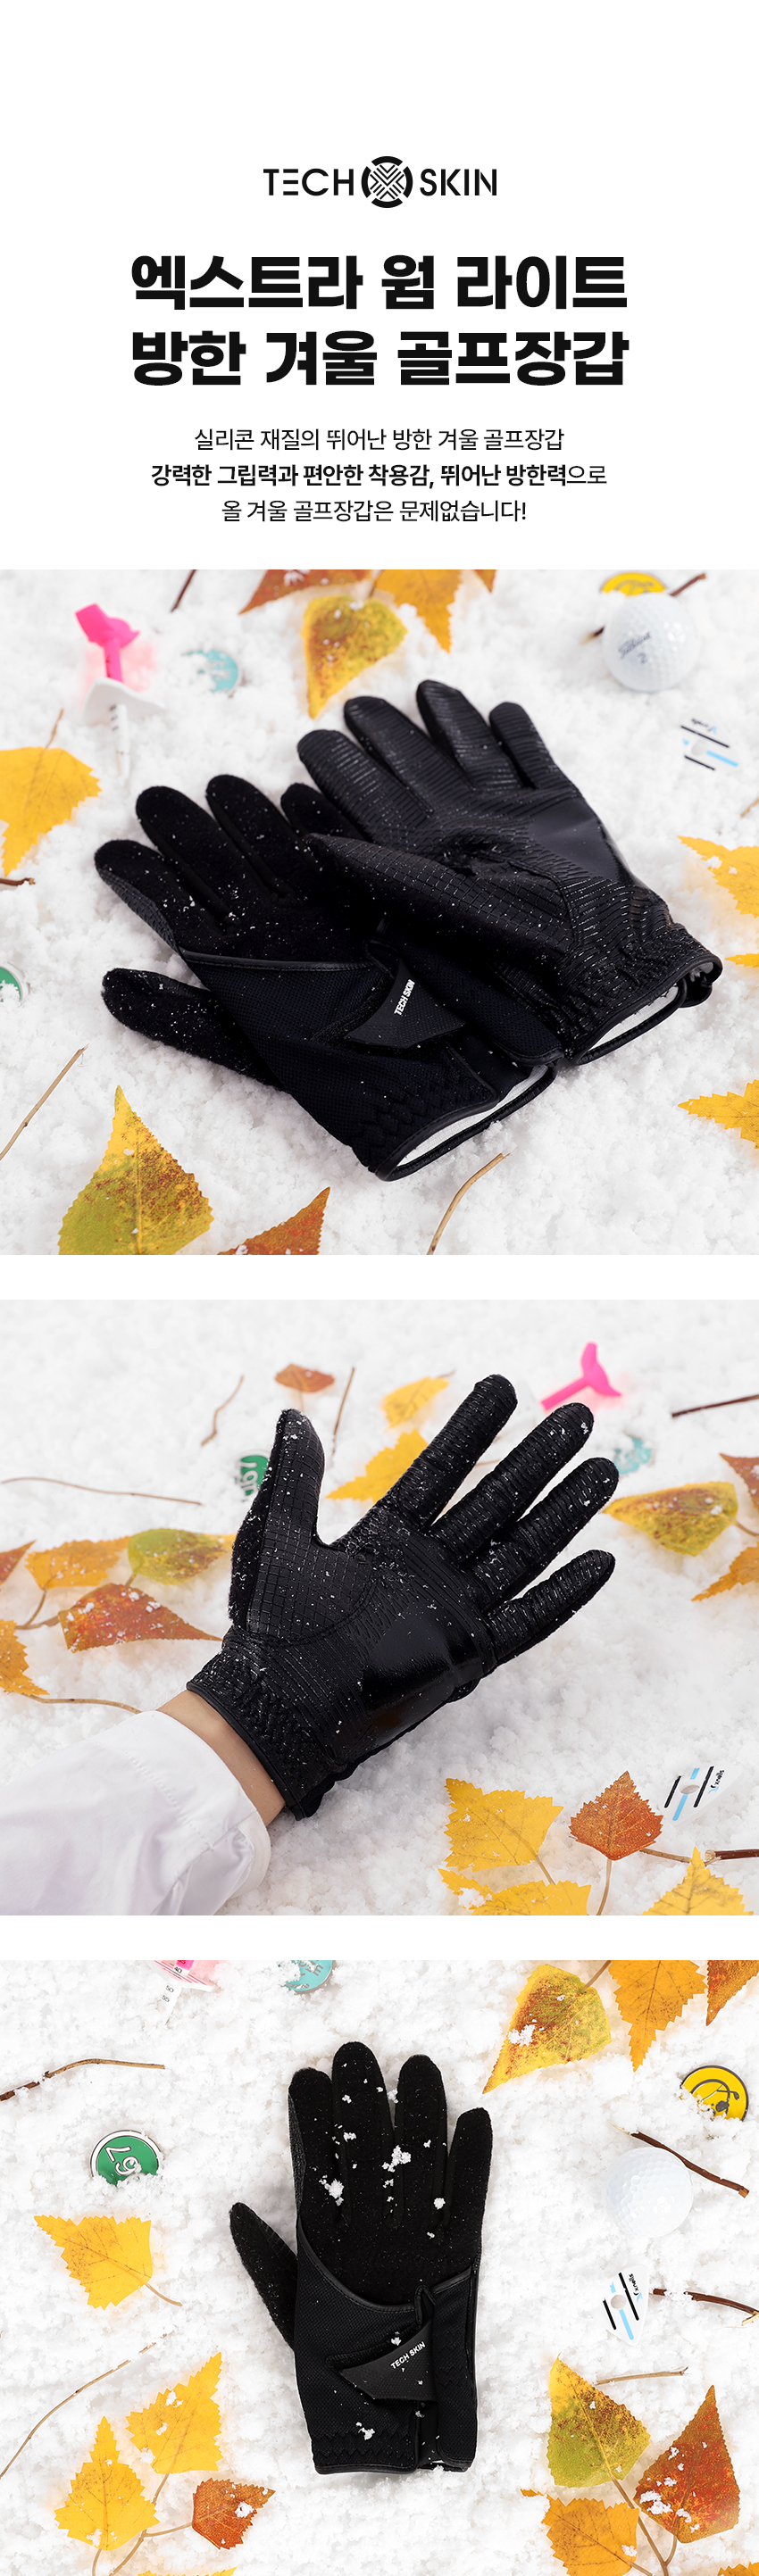 extra_winter_glove2_03.webp